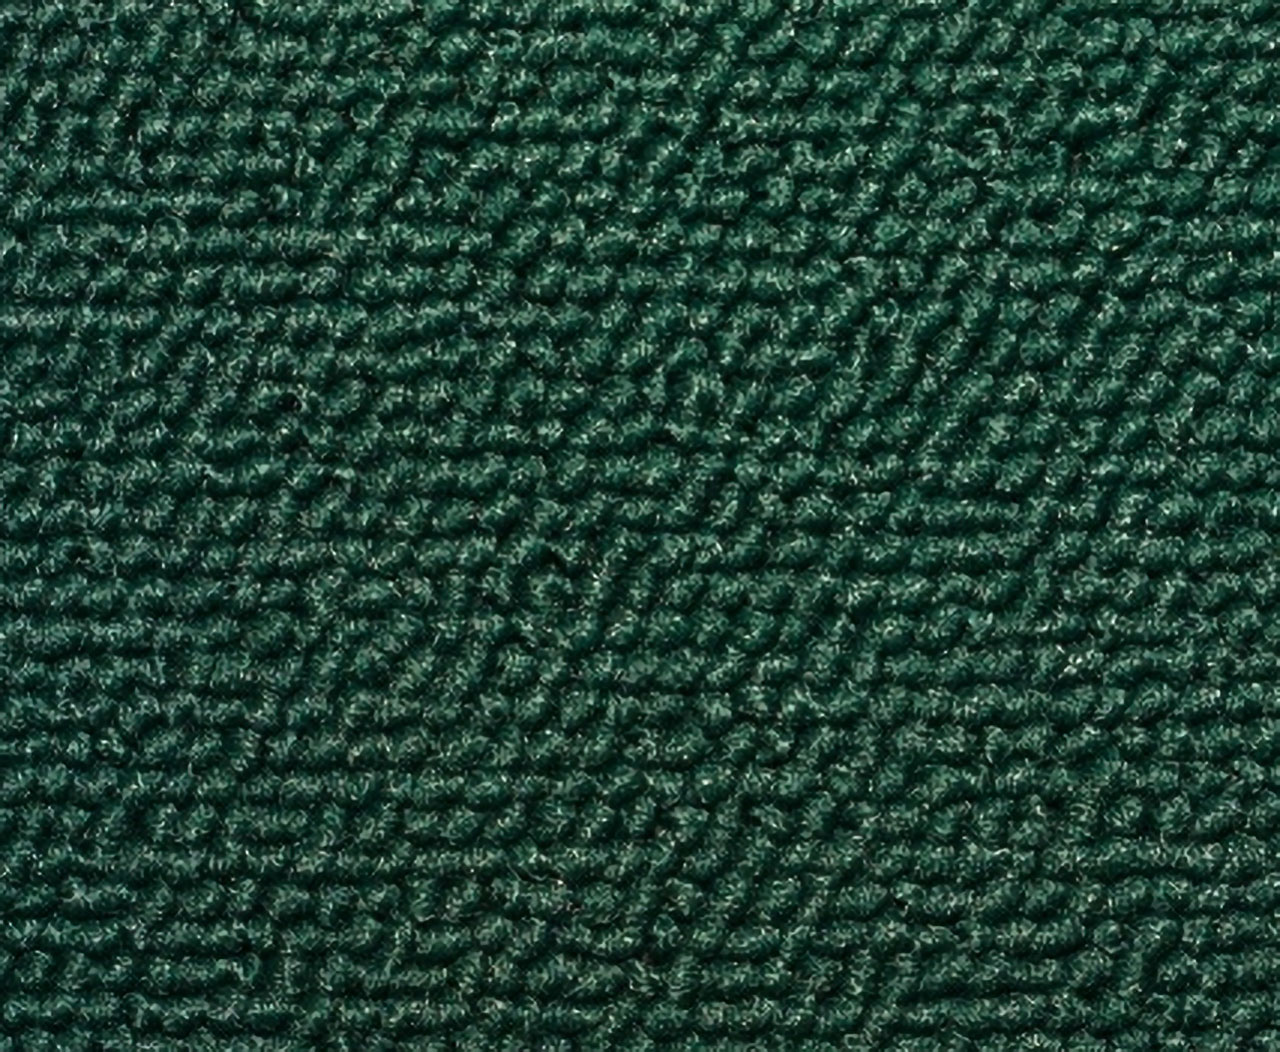 Holden Special EK Special Sedan 1024 Valley & Kentucky Green Carpet (Image 1 of 1)